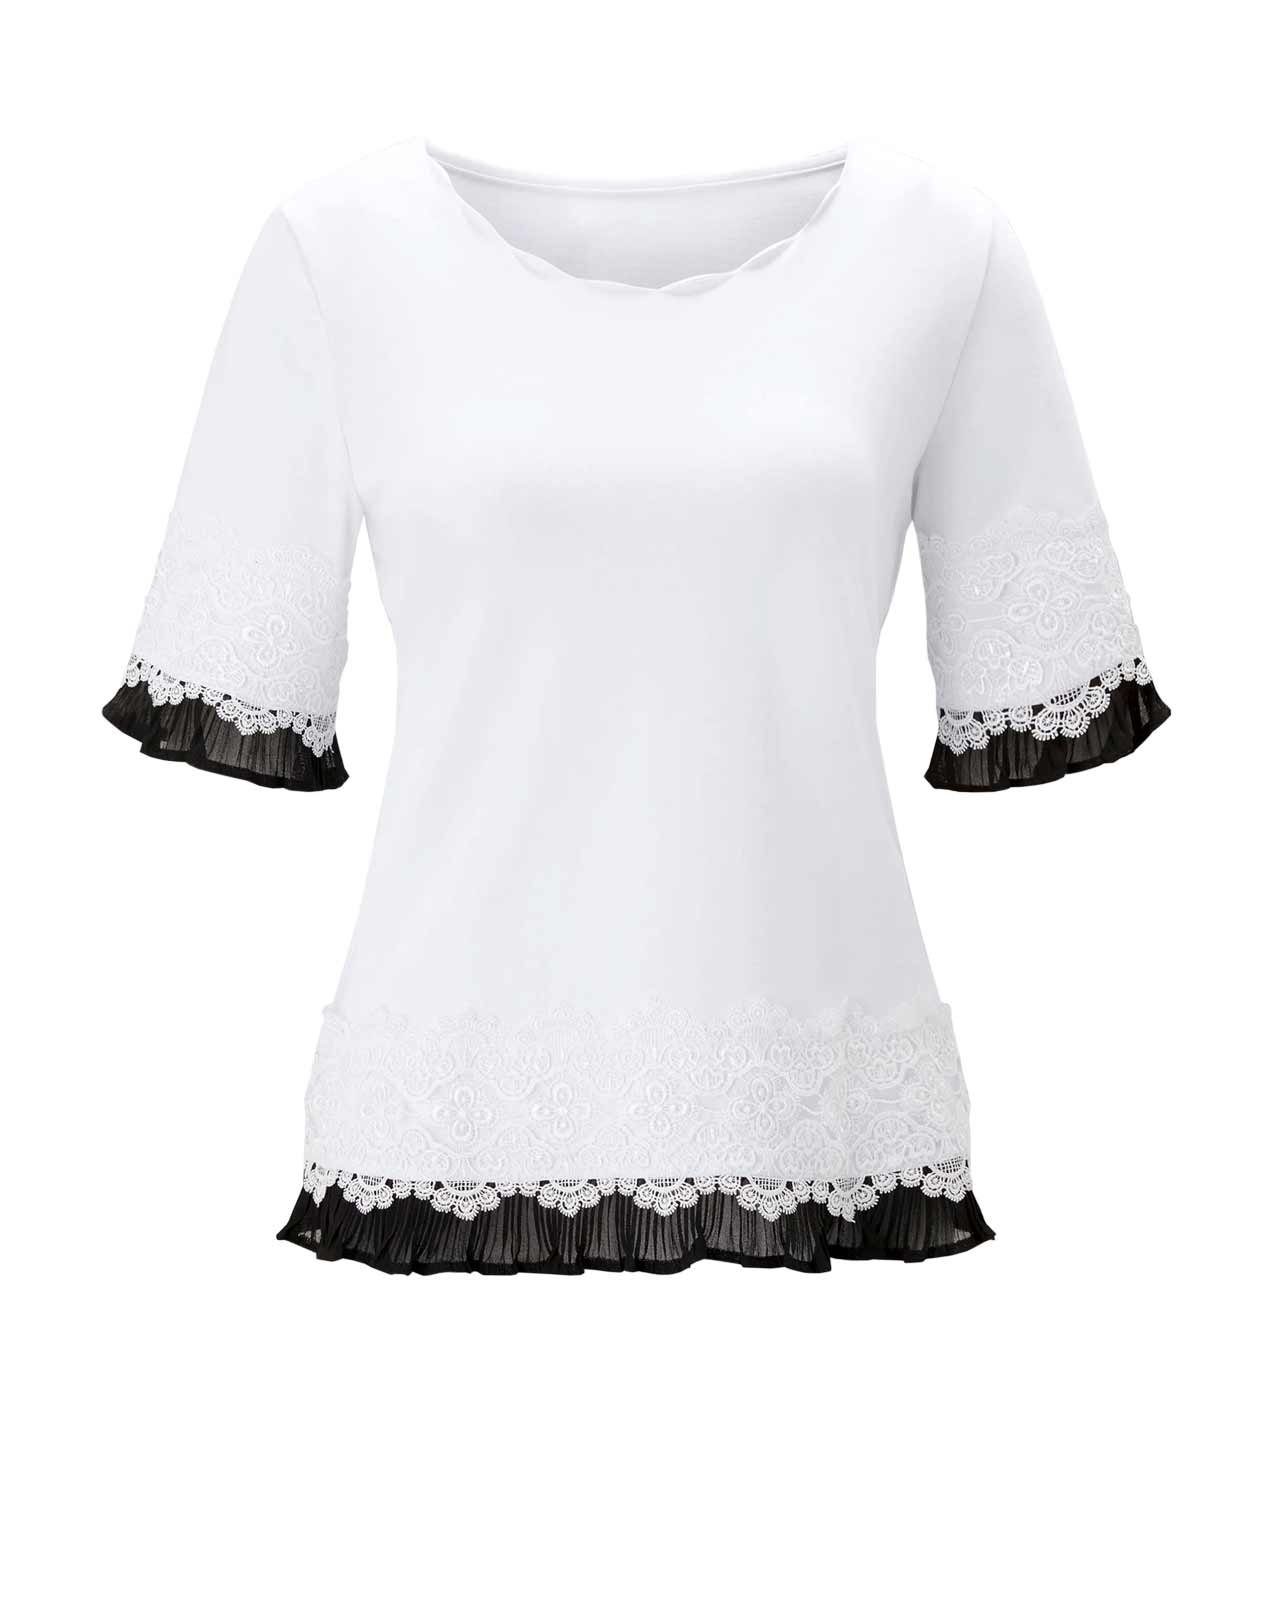 T-Shirt L Damen creation L weiß-schwarz Spitze, Jerseyshirt mit CRéATION